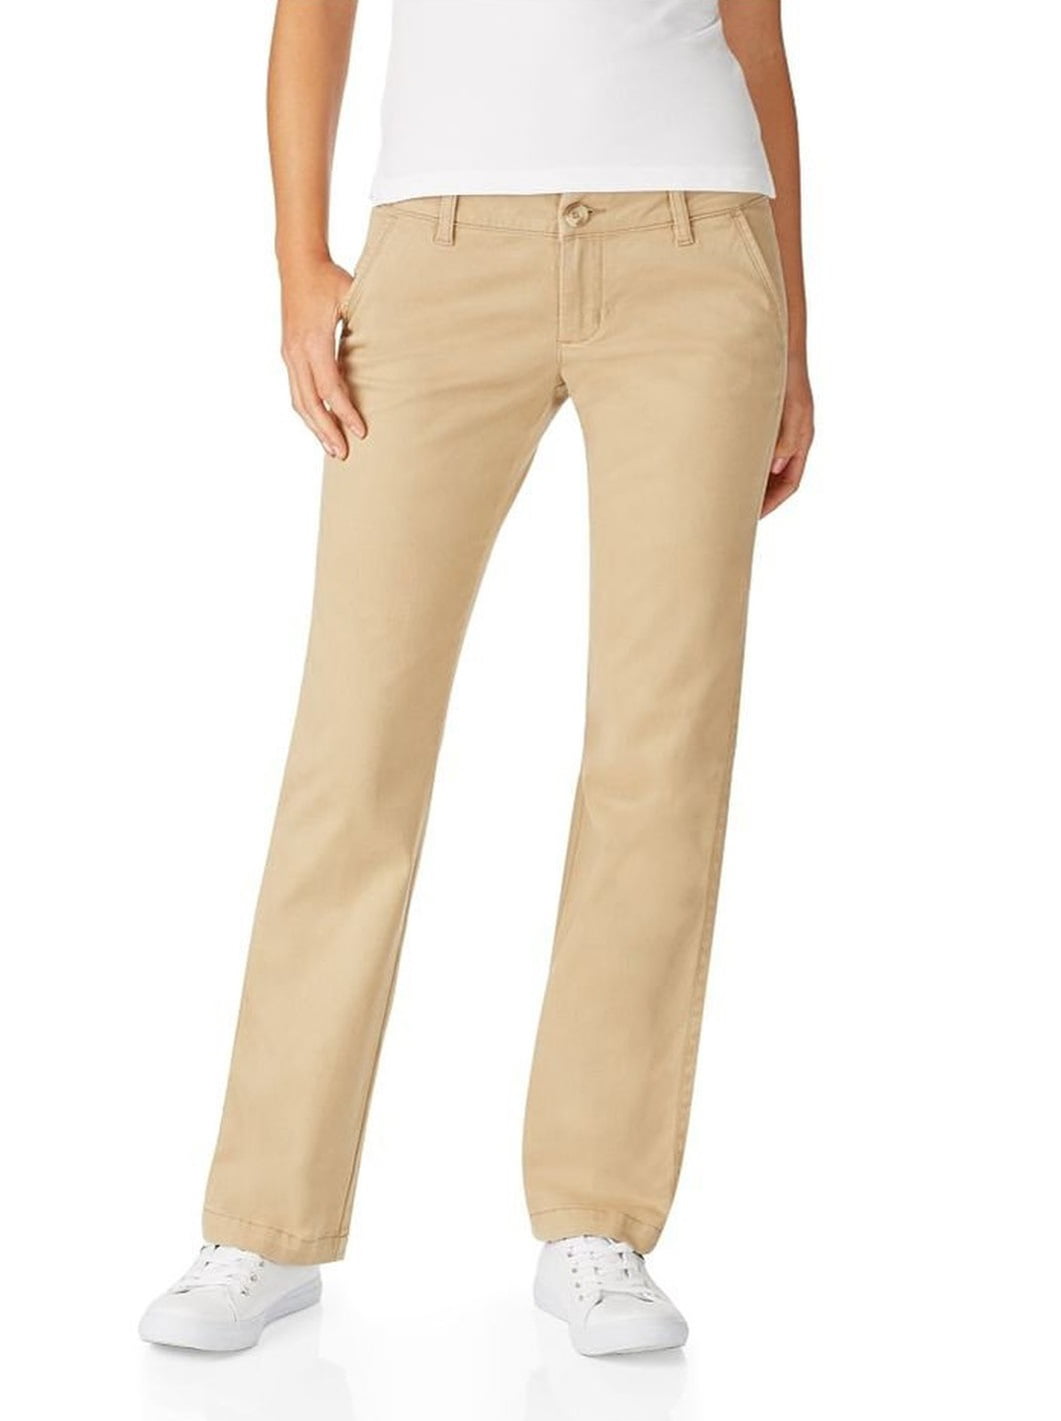 Aeropostale Womens Khaki Chino Pants 251 0S - Walmart.com